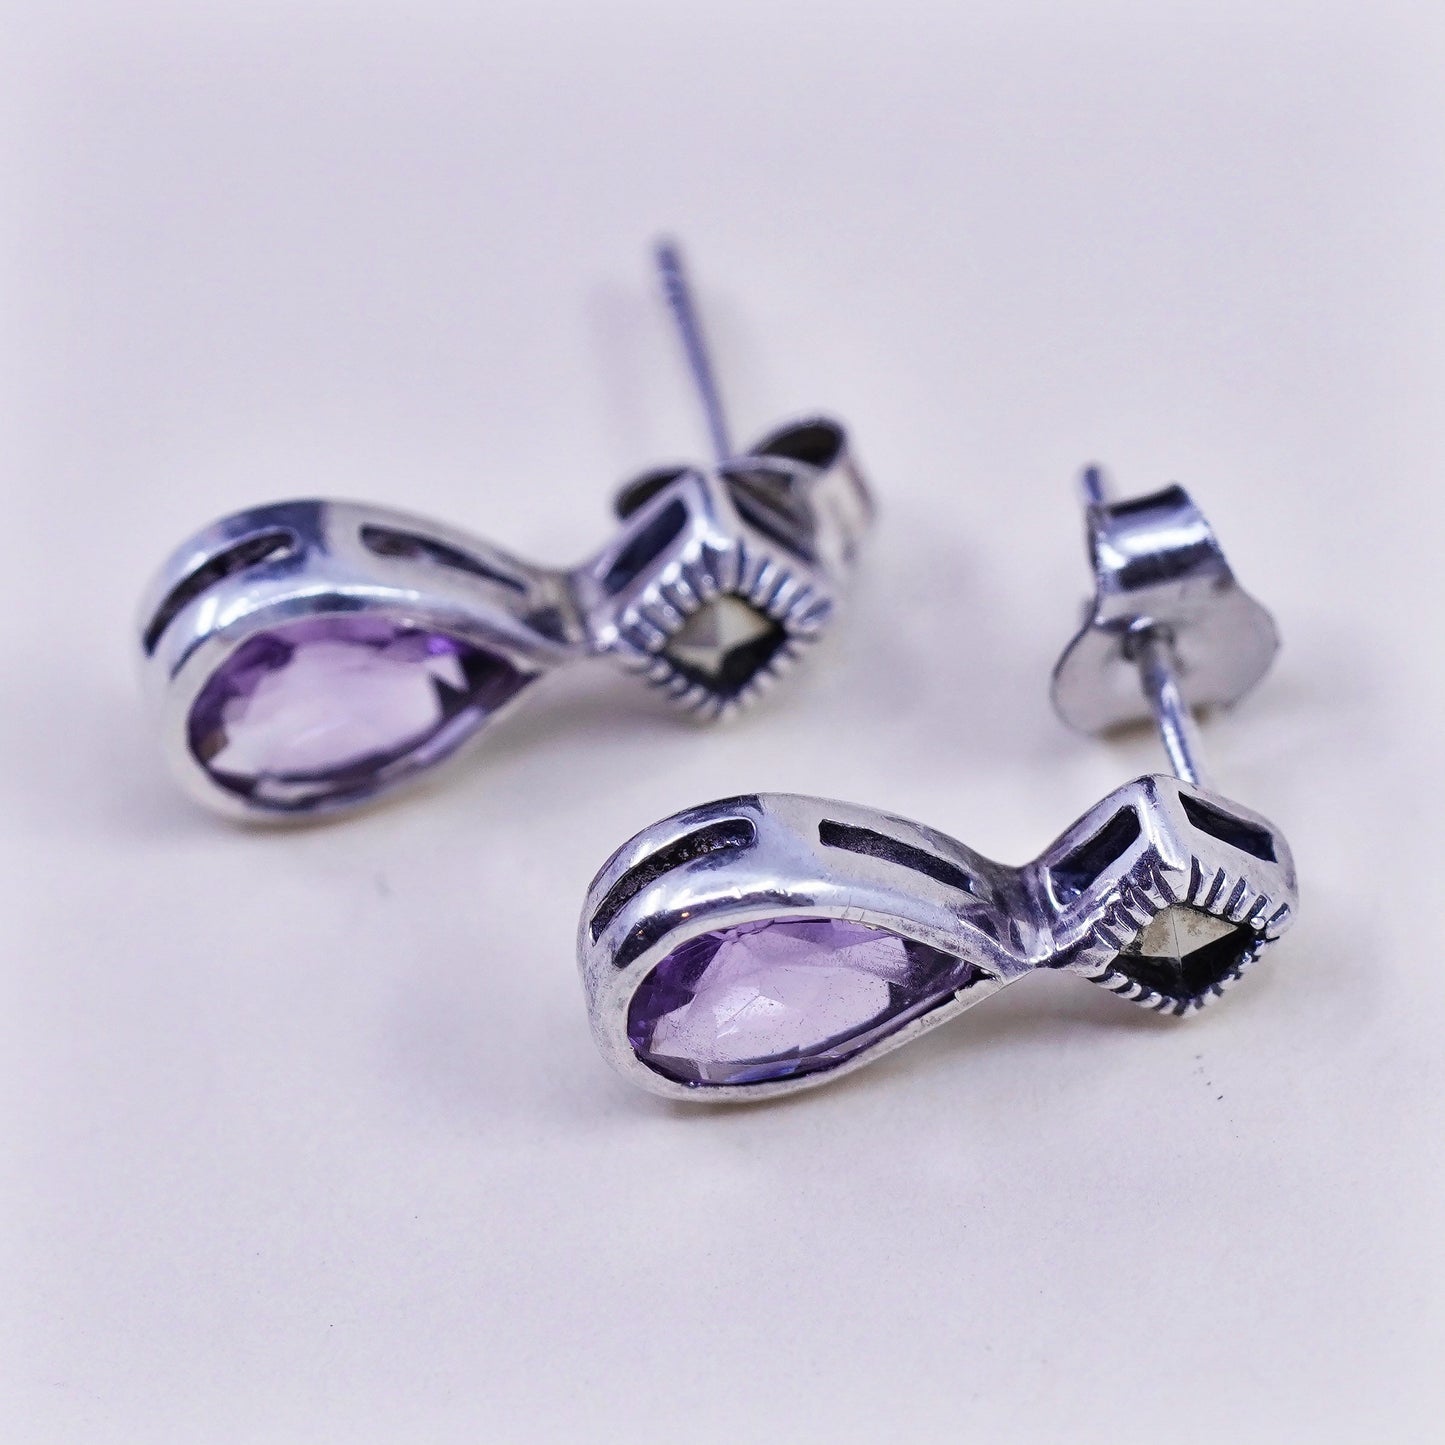 DBJ modern sterling silver handmade earrings, 925 teardrop amethyst marcasite